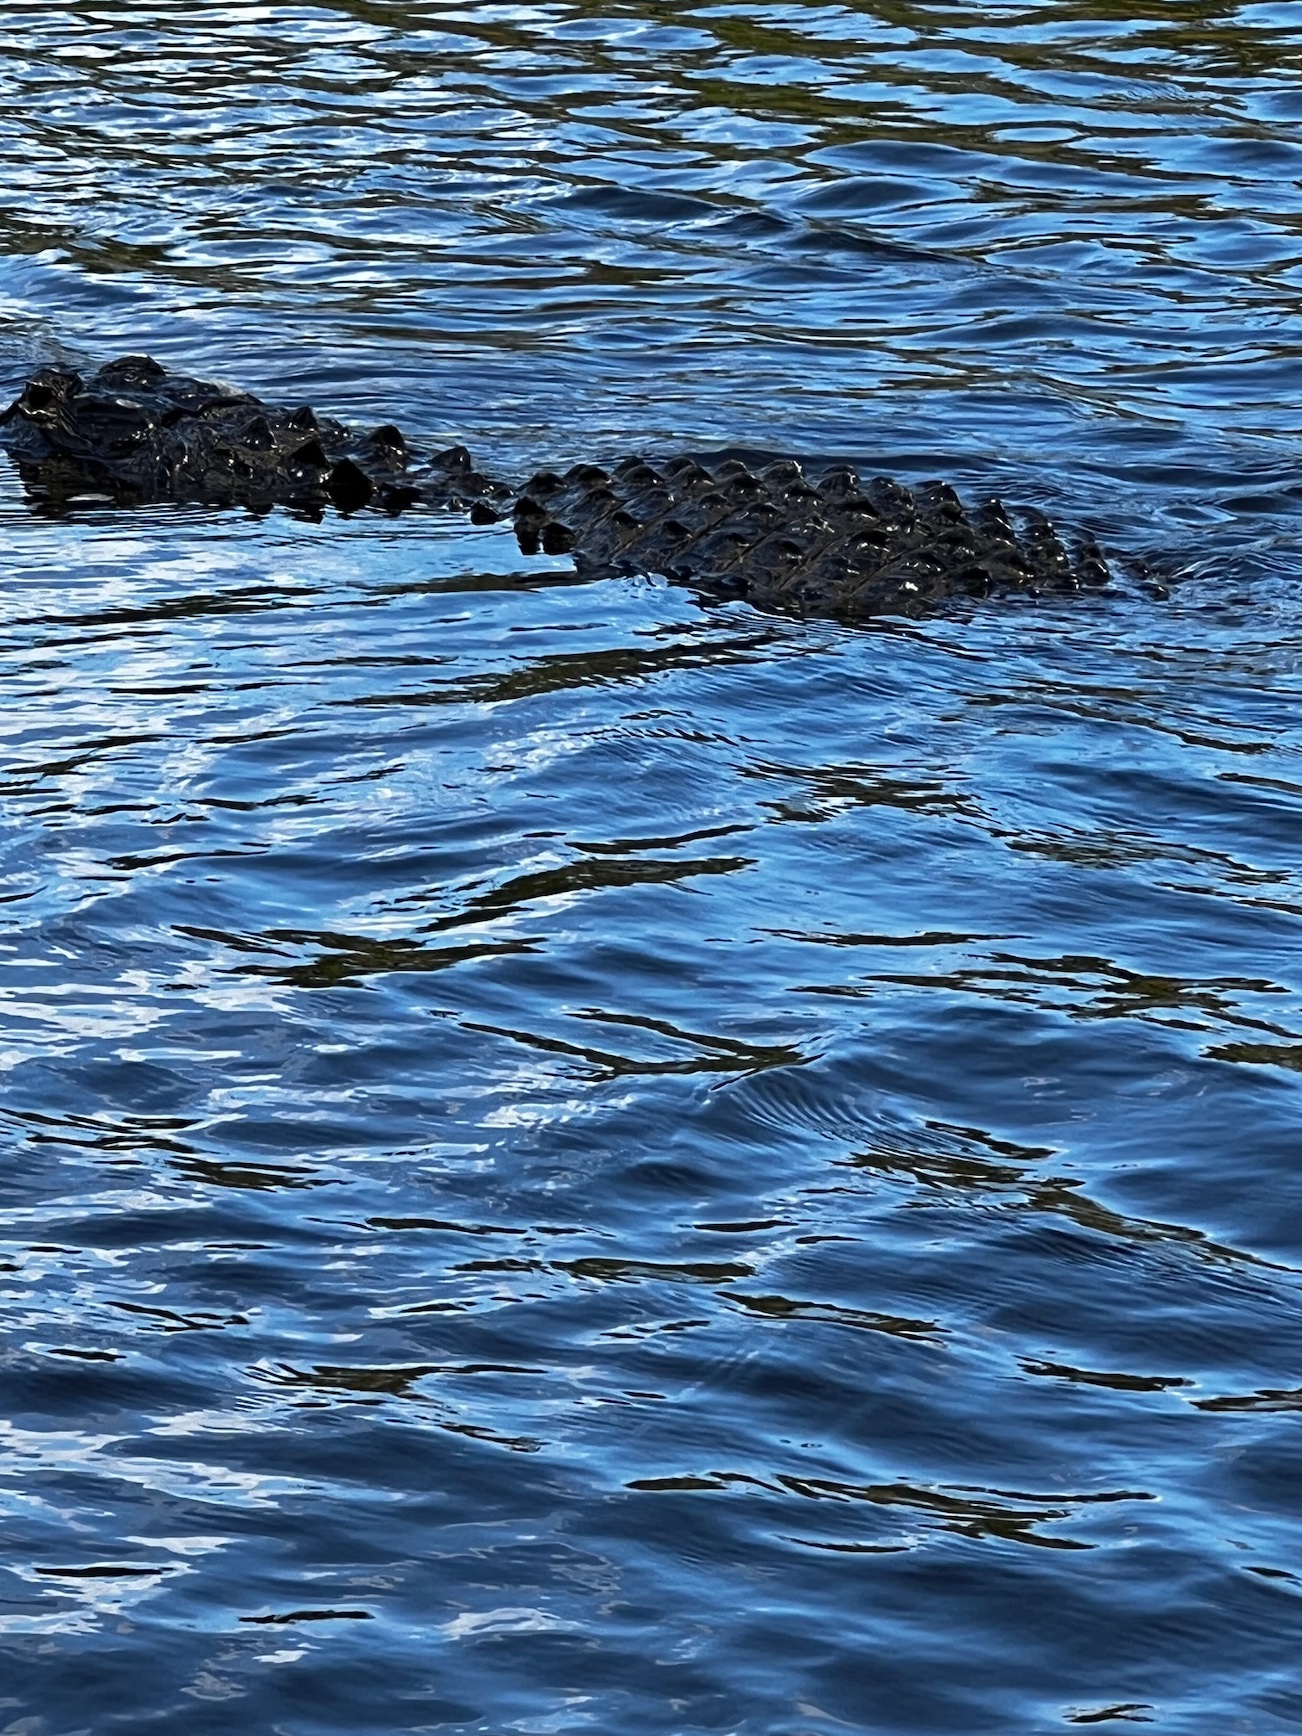 Alligator in the swamp by Jo-Ann Rolle